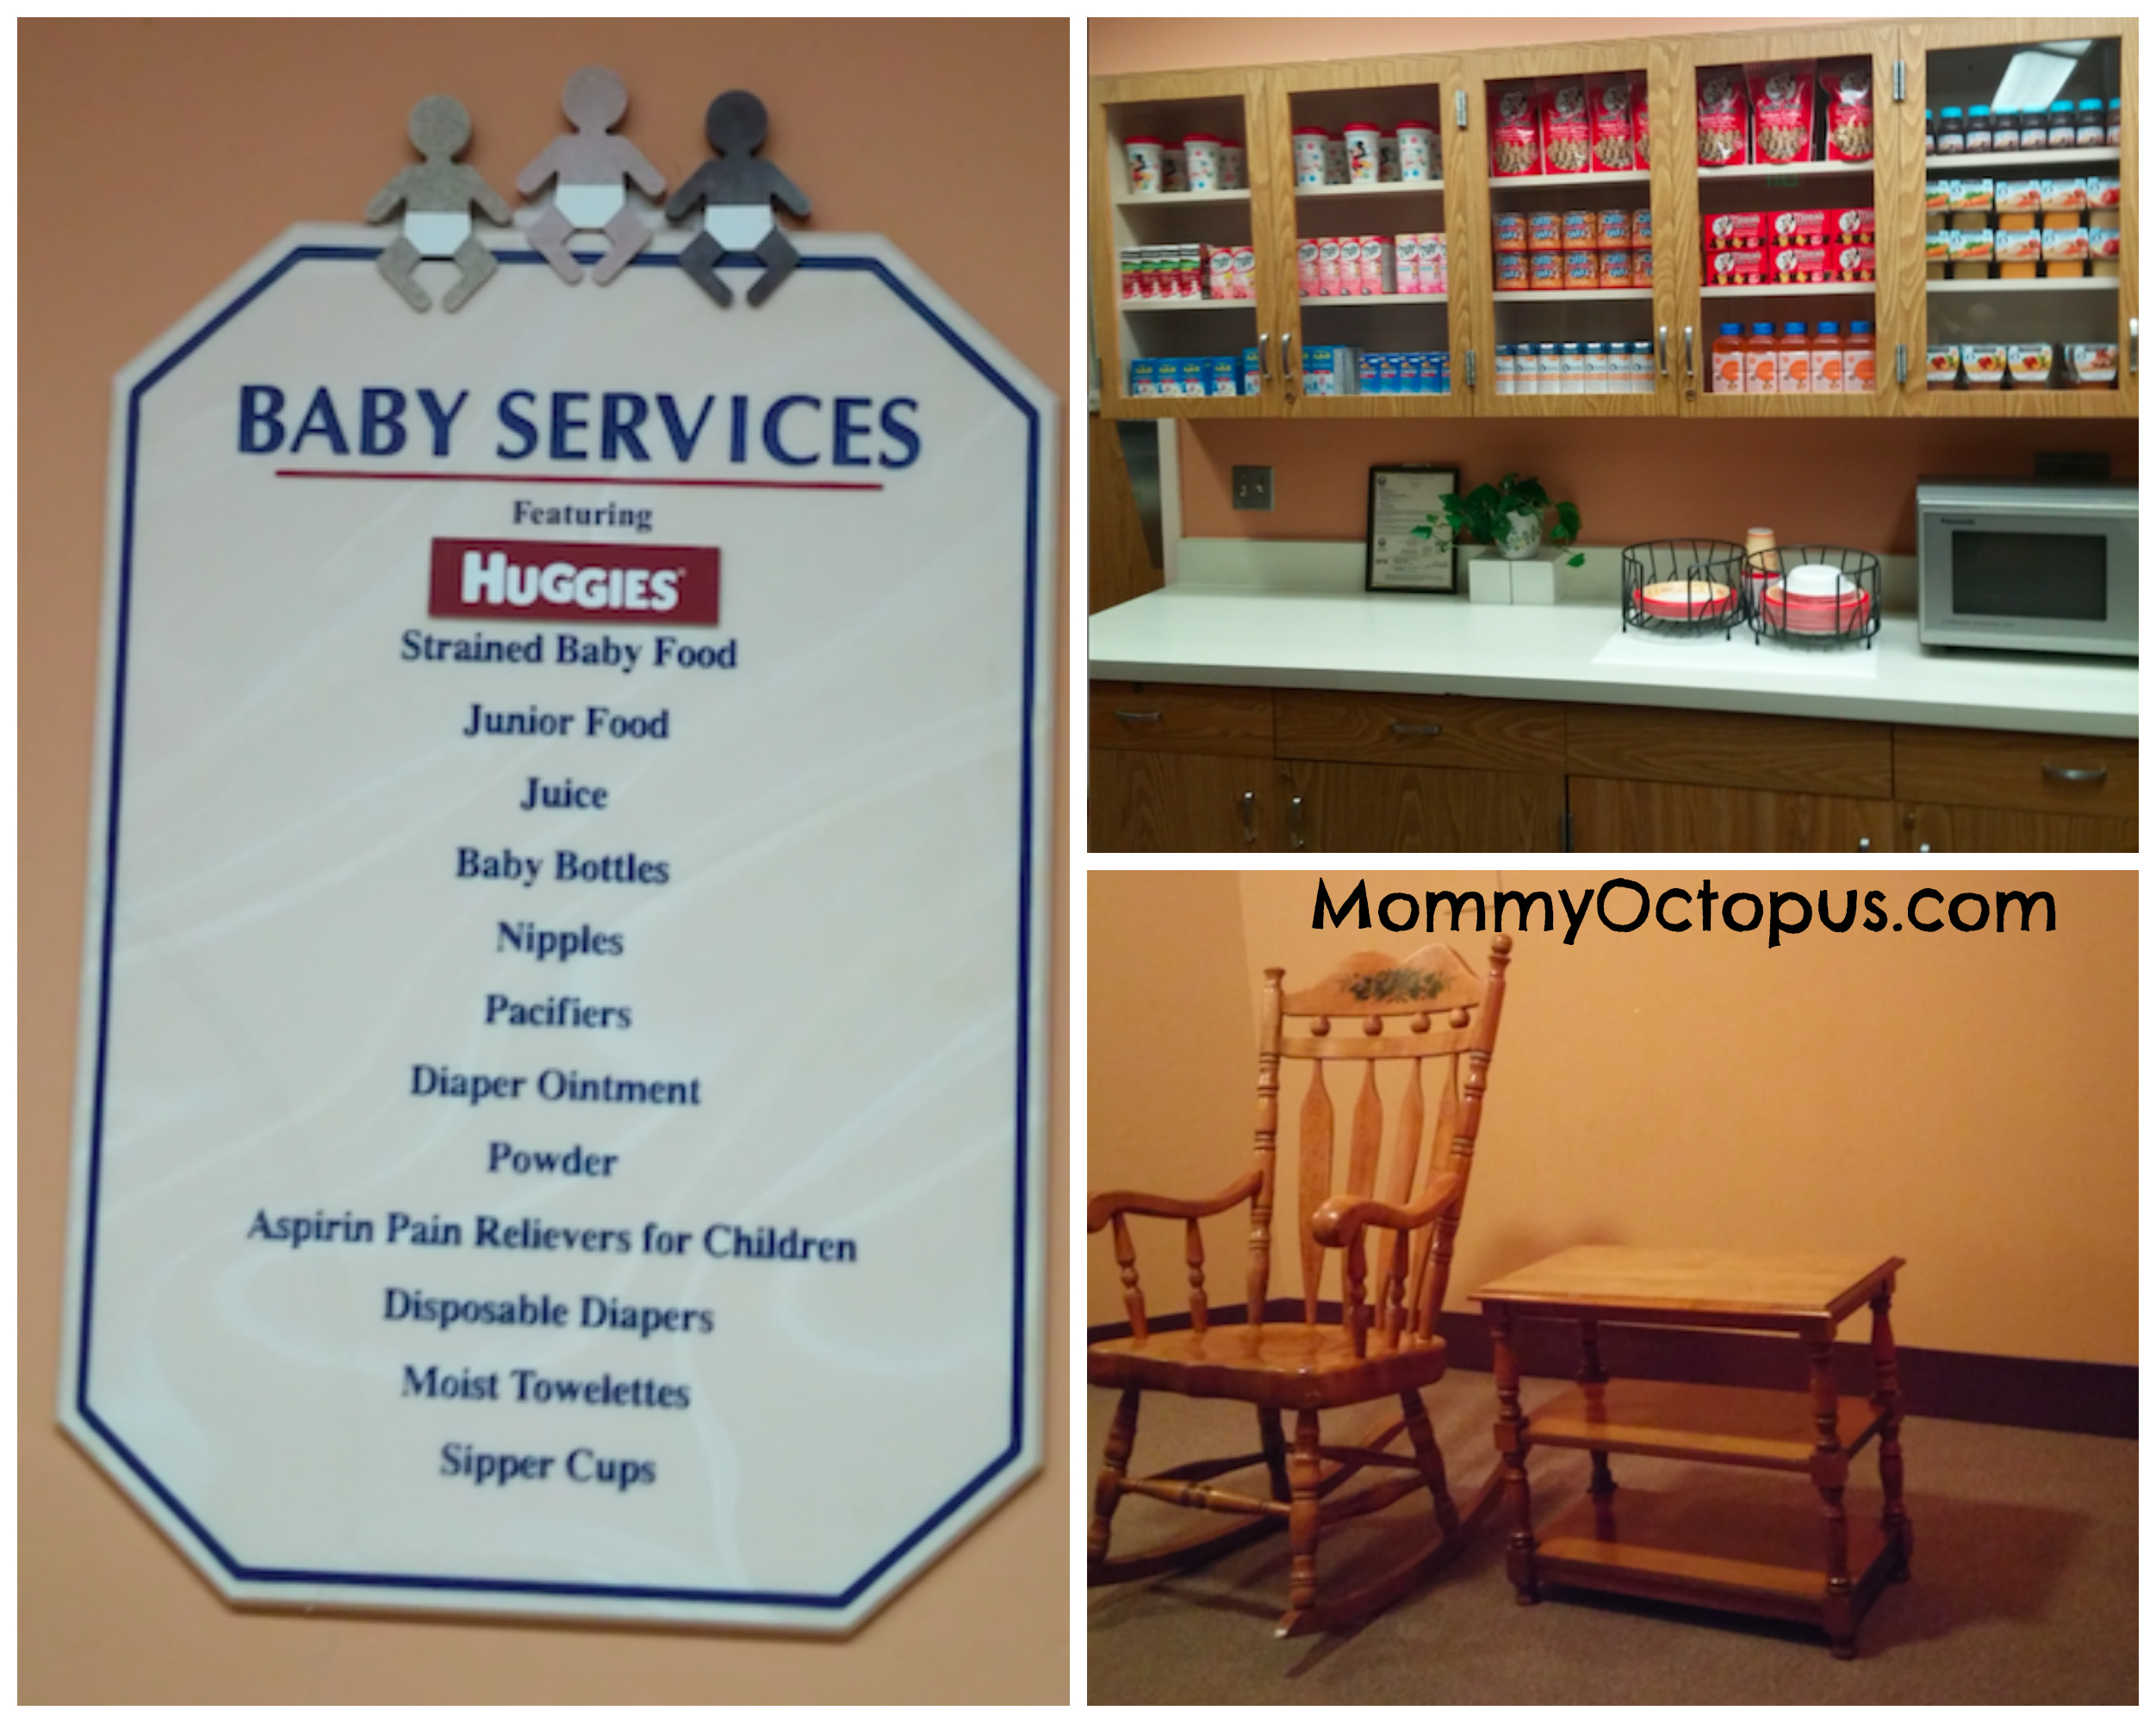 disney baby care center